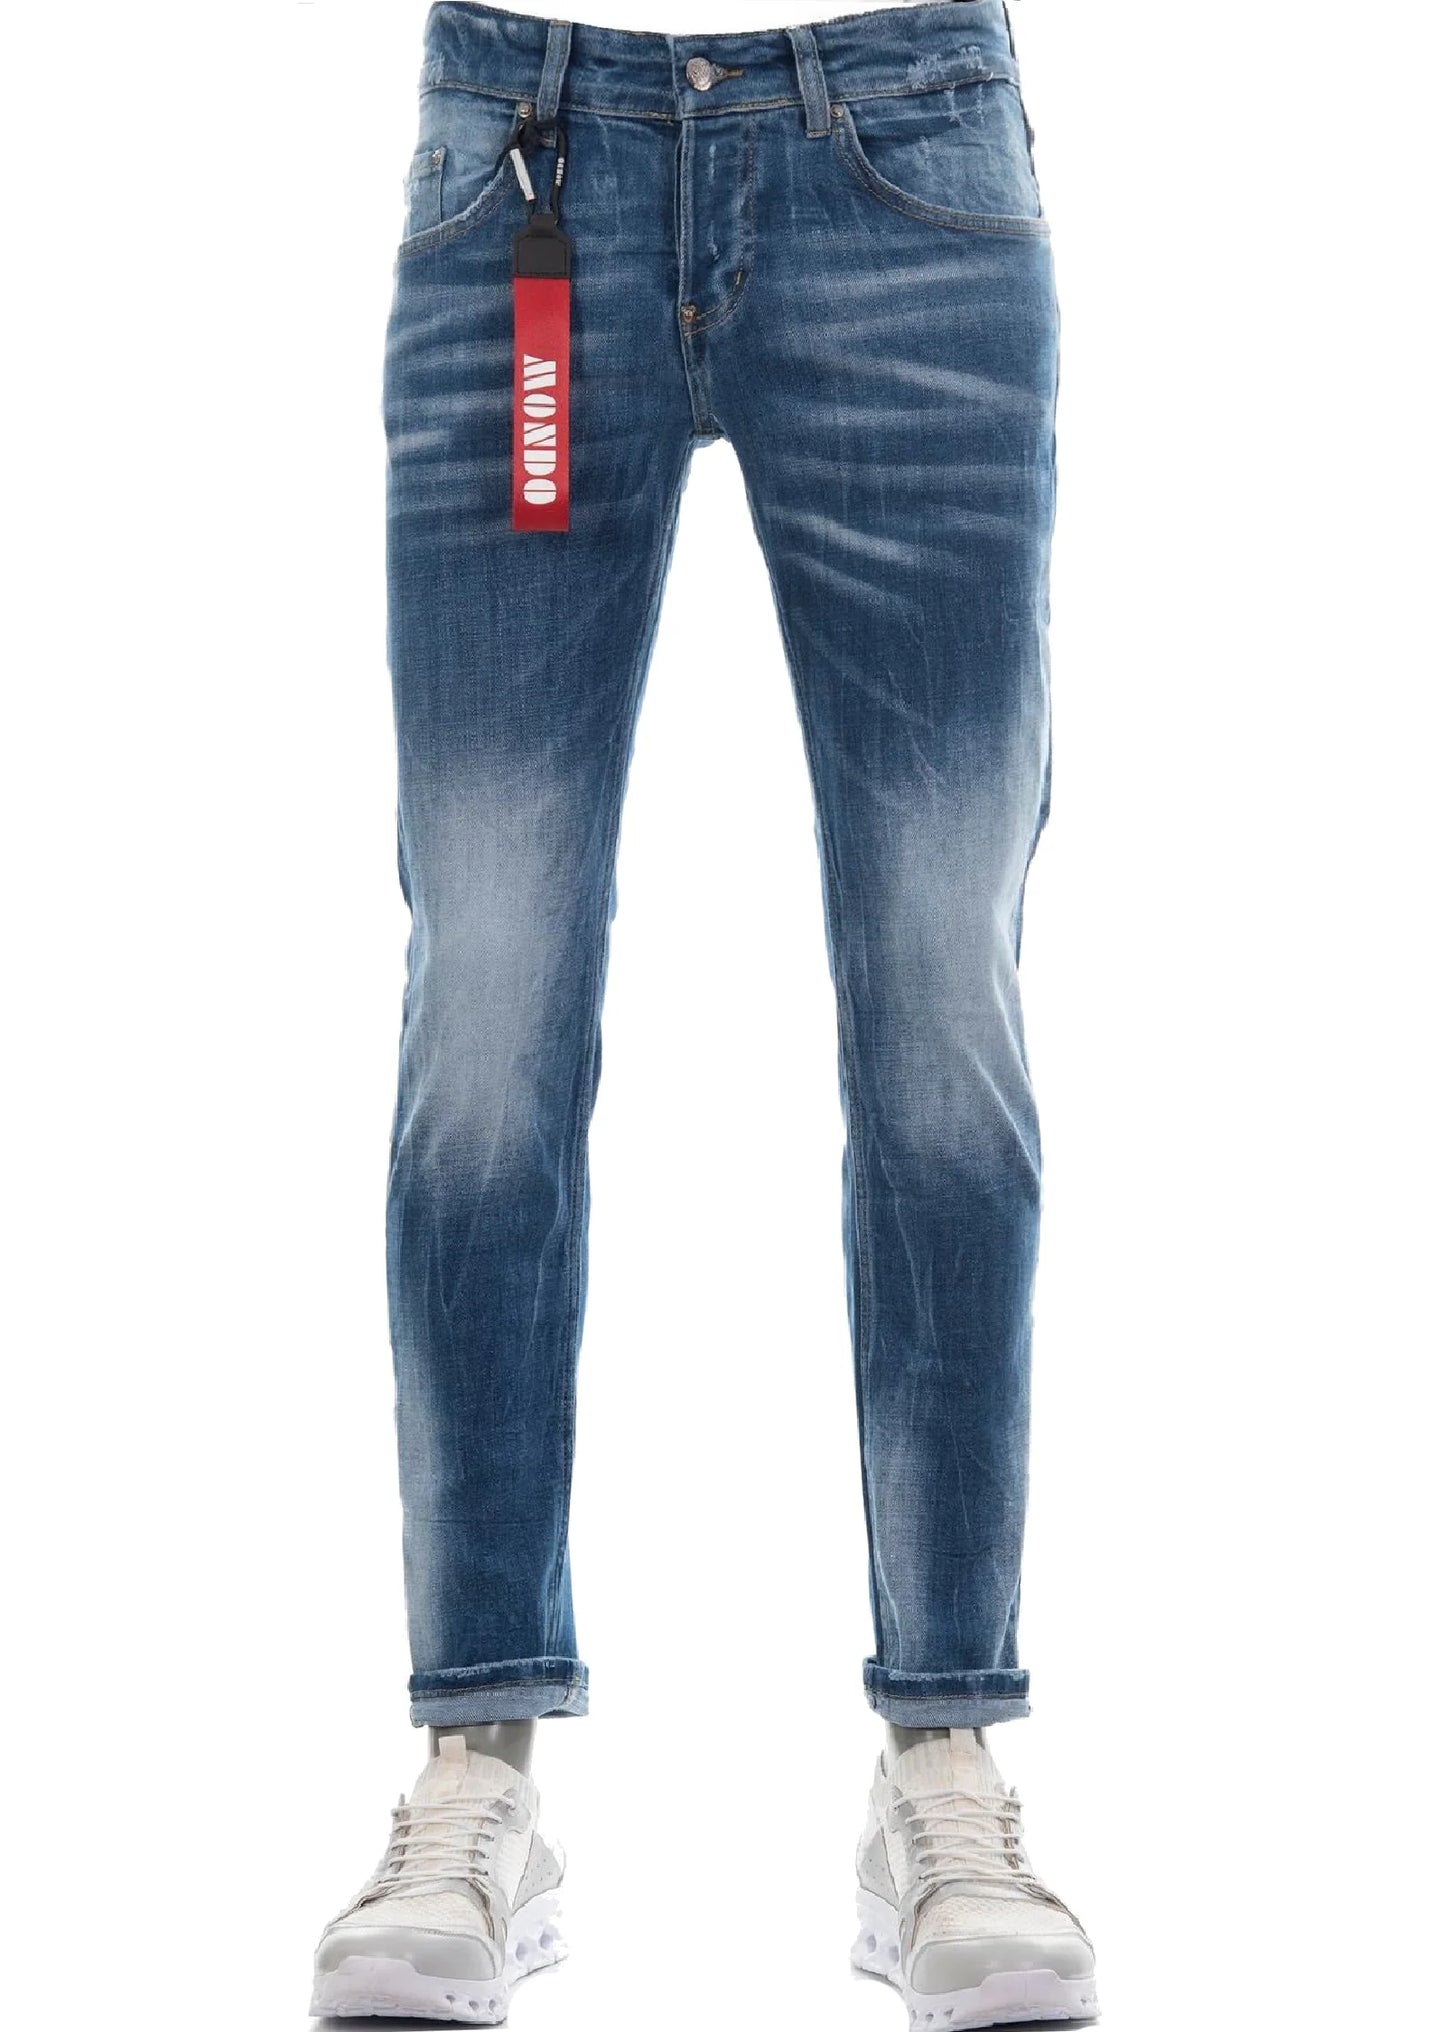 Mondo Jeans P-1656 PANTS Mondo Collection Vercini